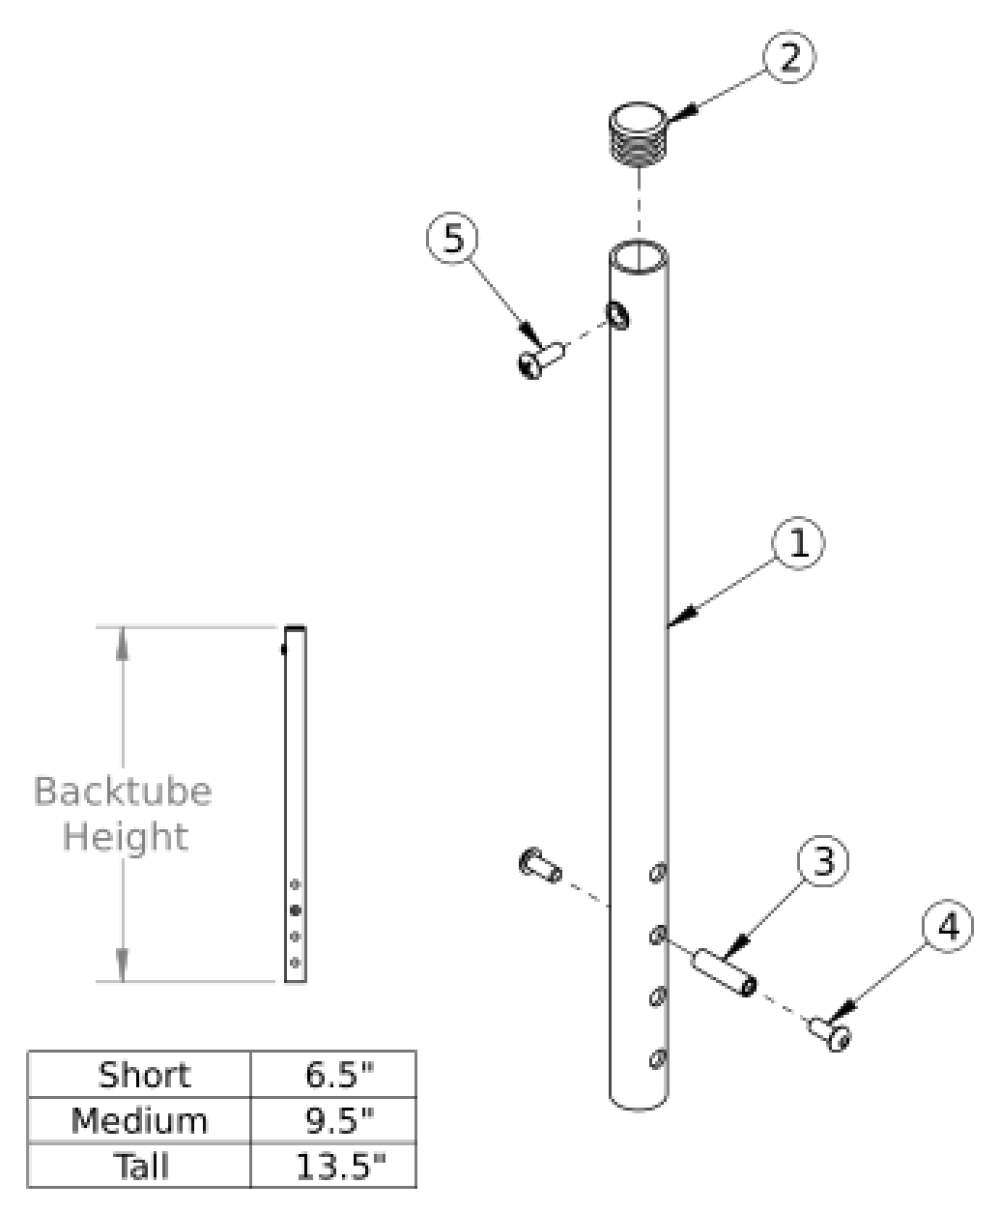 (discontinued 1) Rogue Backtube parts diagram